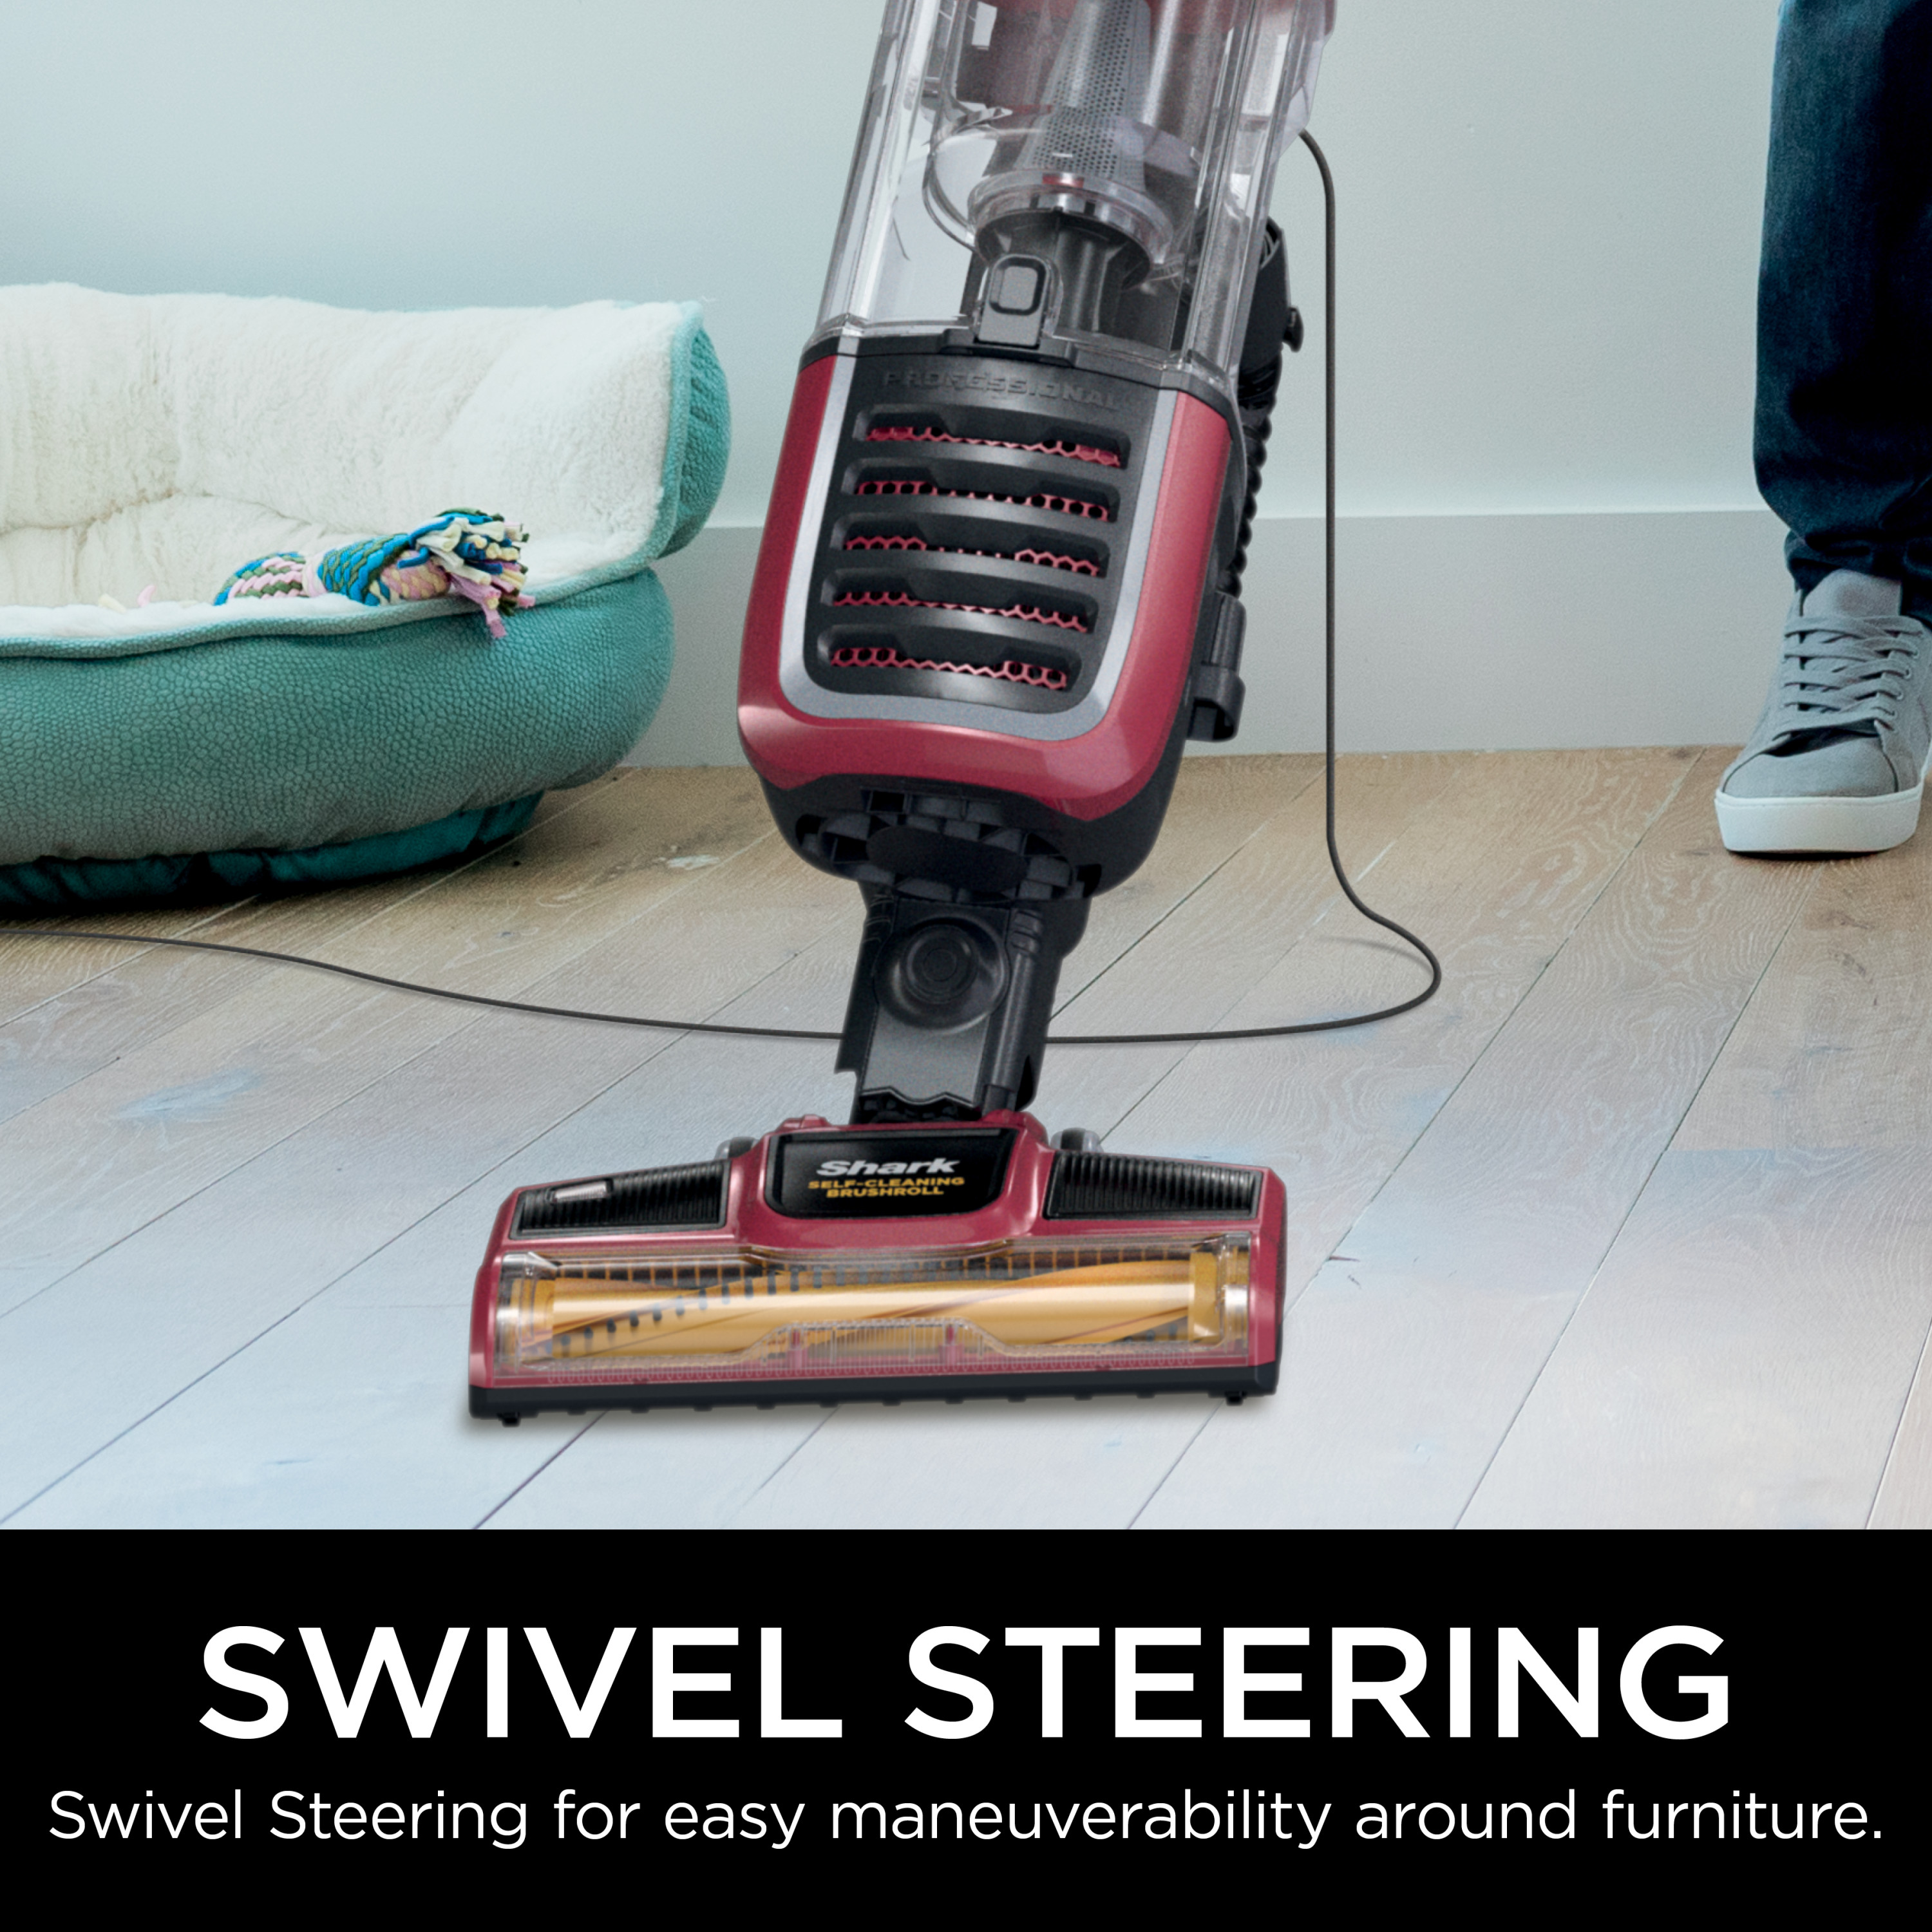 Shark Pro Swivel Pet Upright Vacuum with Self-Cleaning Brushroll CU50WM - image 4 of 8